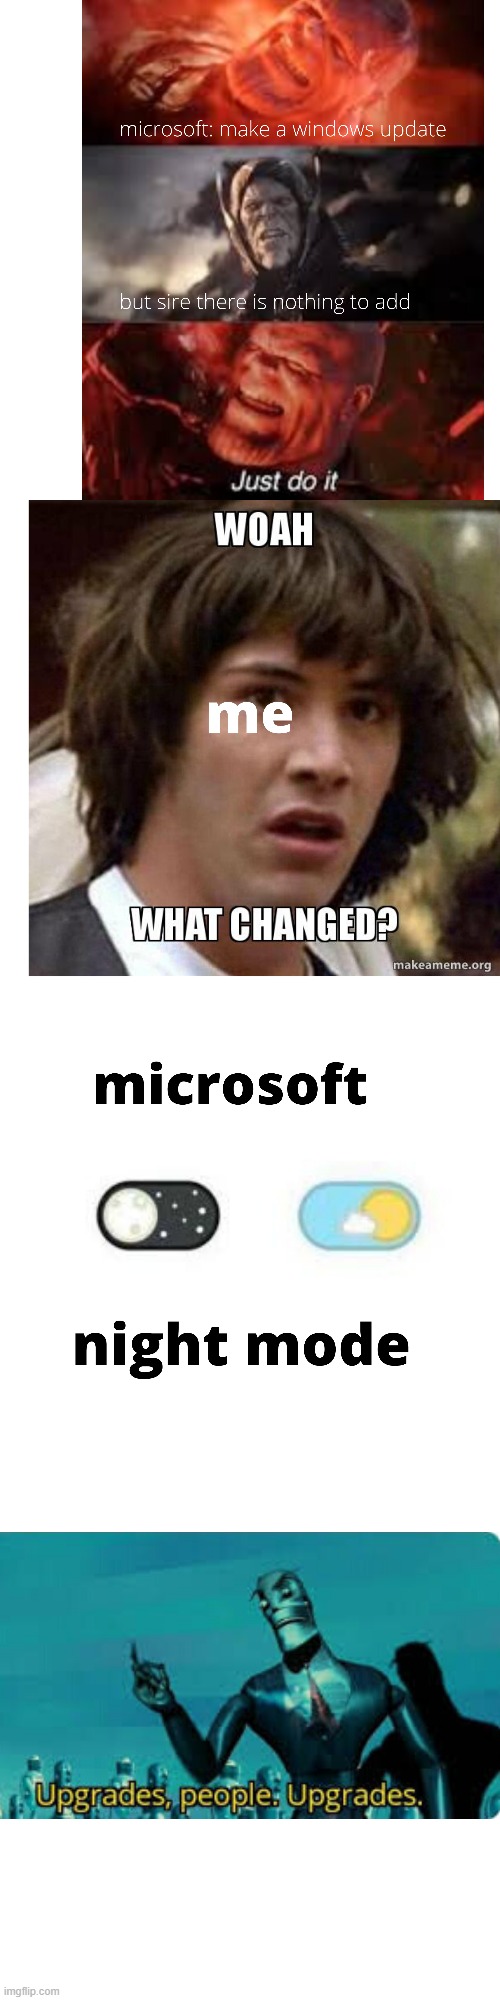 Microsoft updates | image tagged in thanos,microsoft,night mode,keanu reeves,updates,upgrades | made w/ Imgflip meme maker